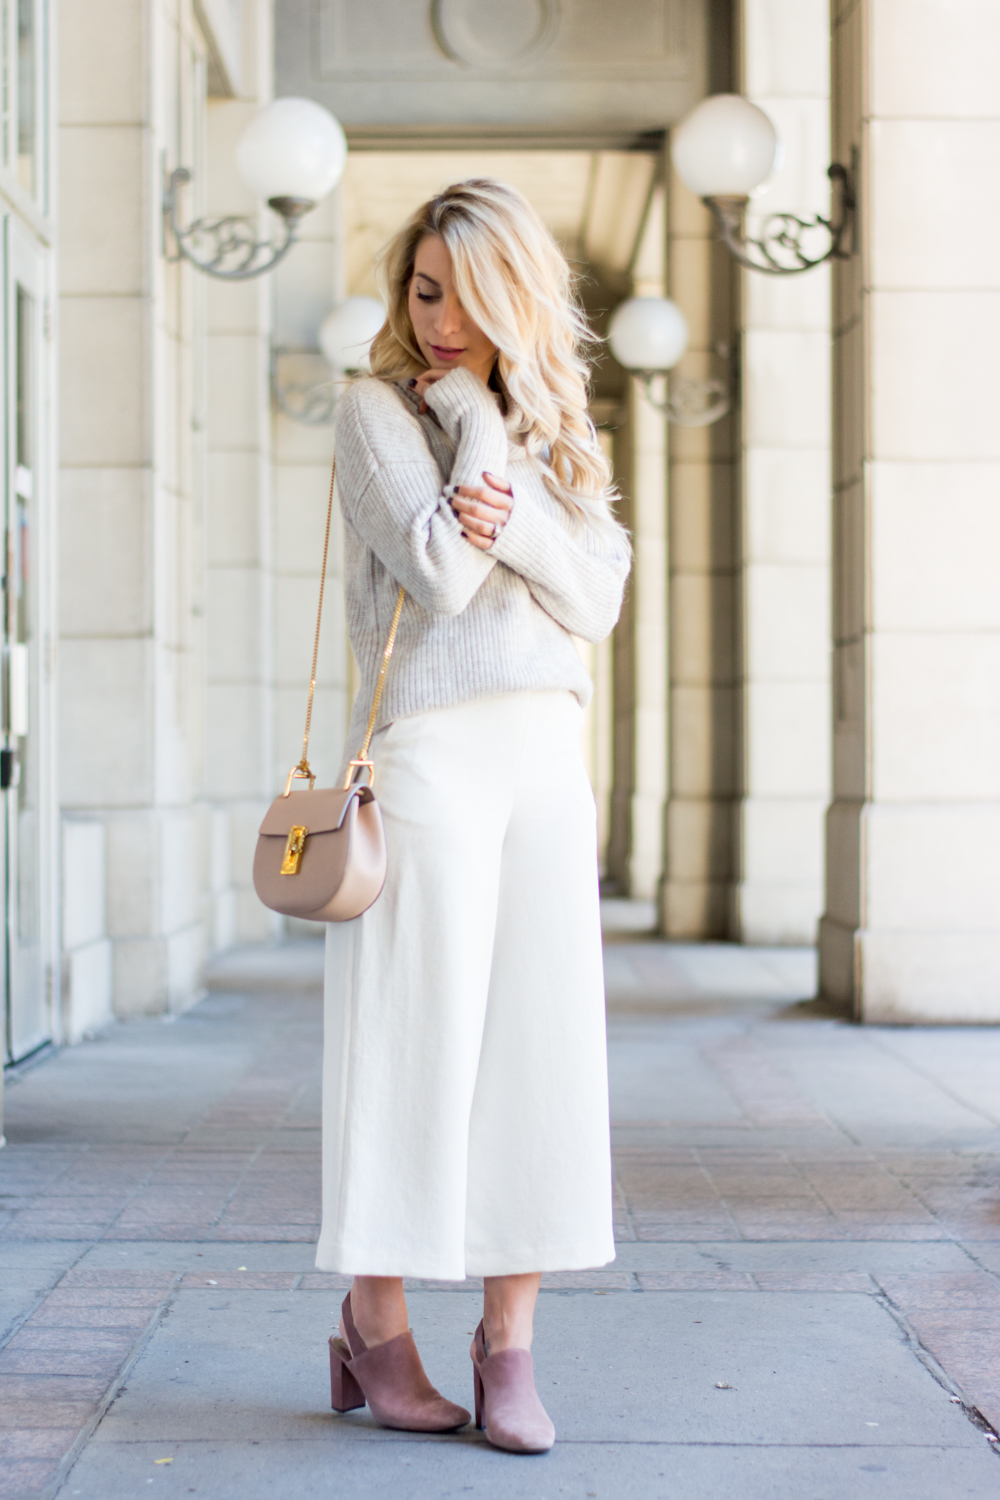 OOTD - White Culottes For Fall | La Petite Noob | A Toronto-Based ...